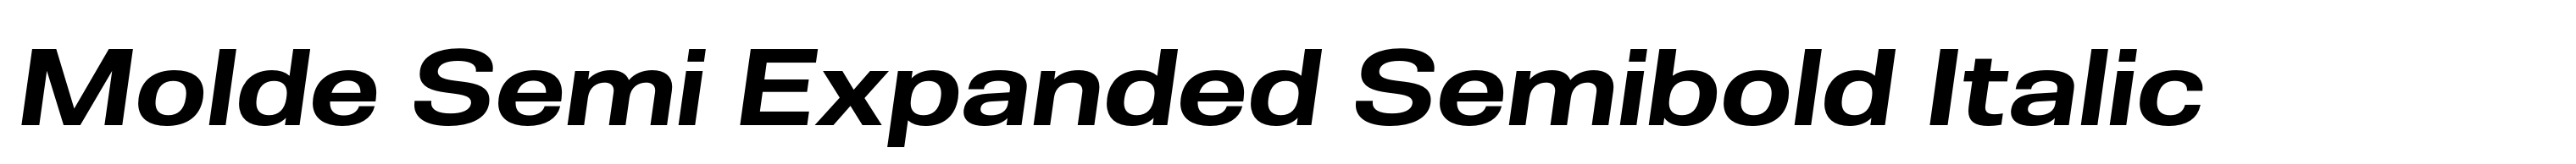 Molde Semi Expanded Semibold Italic